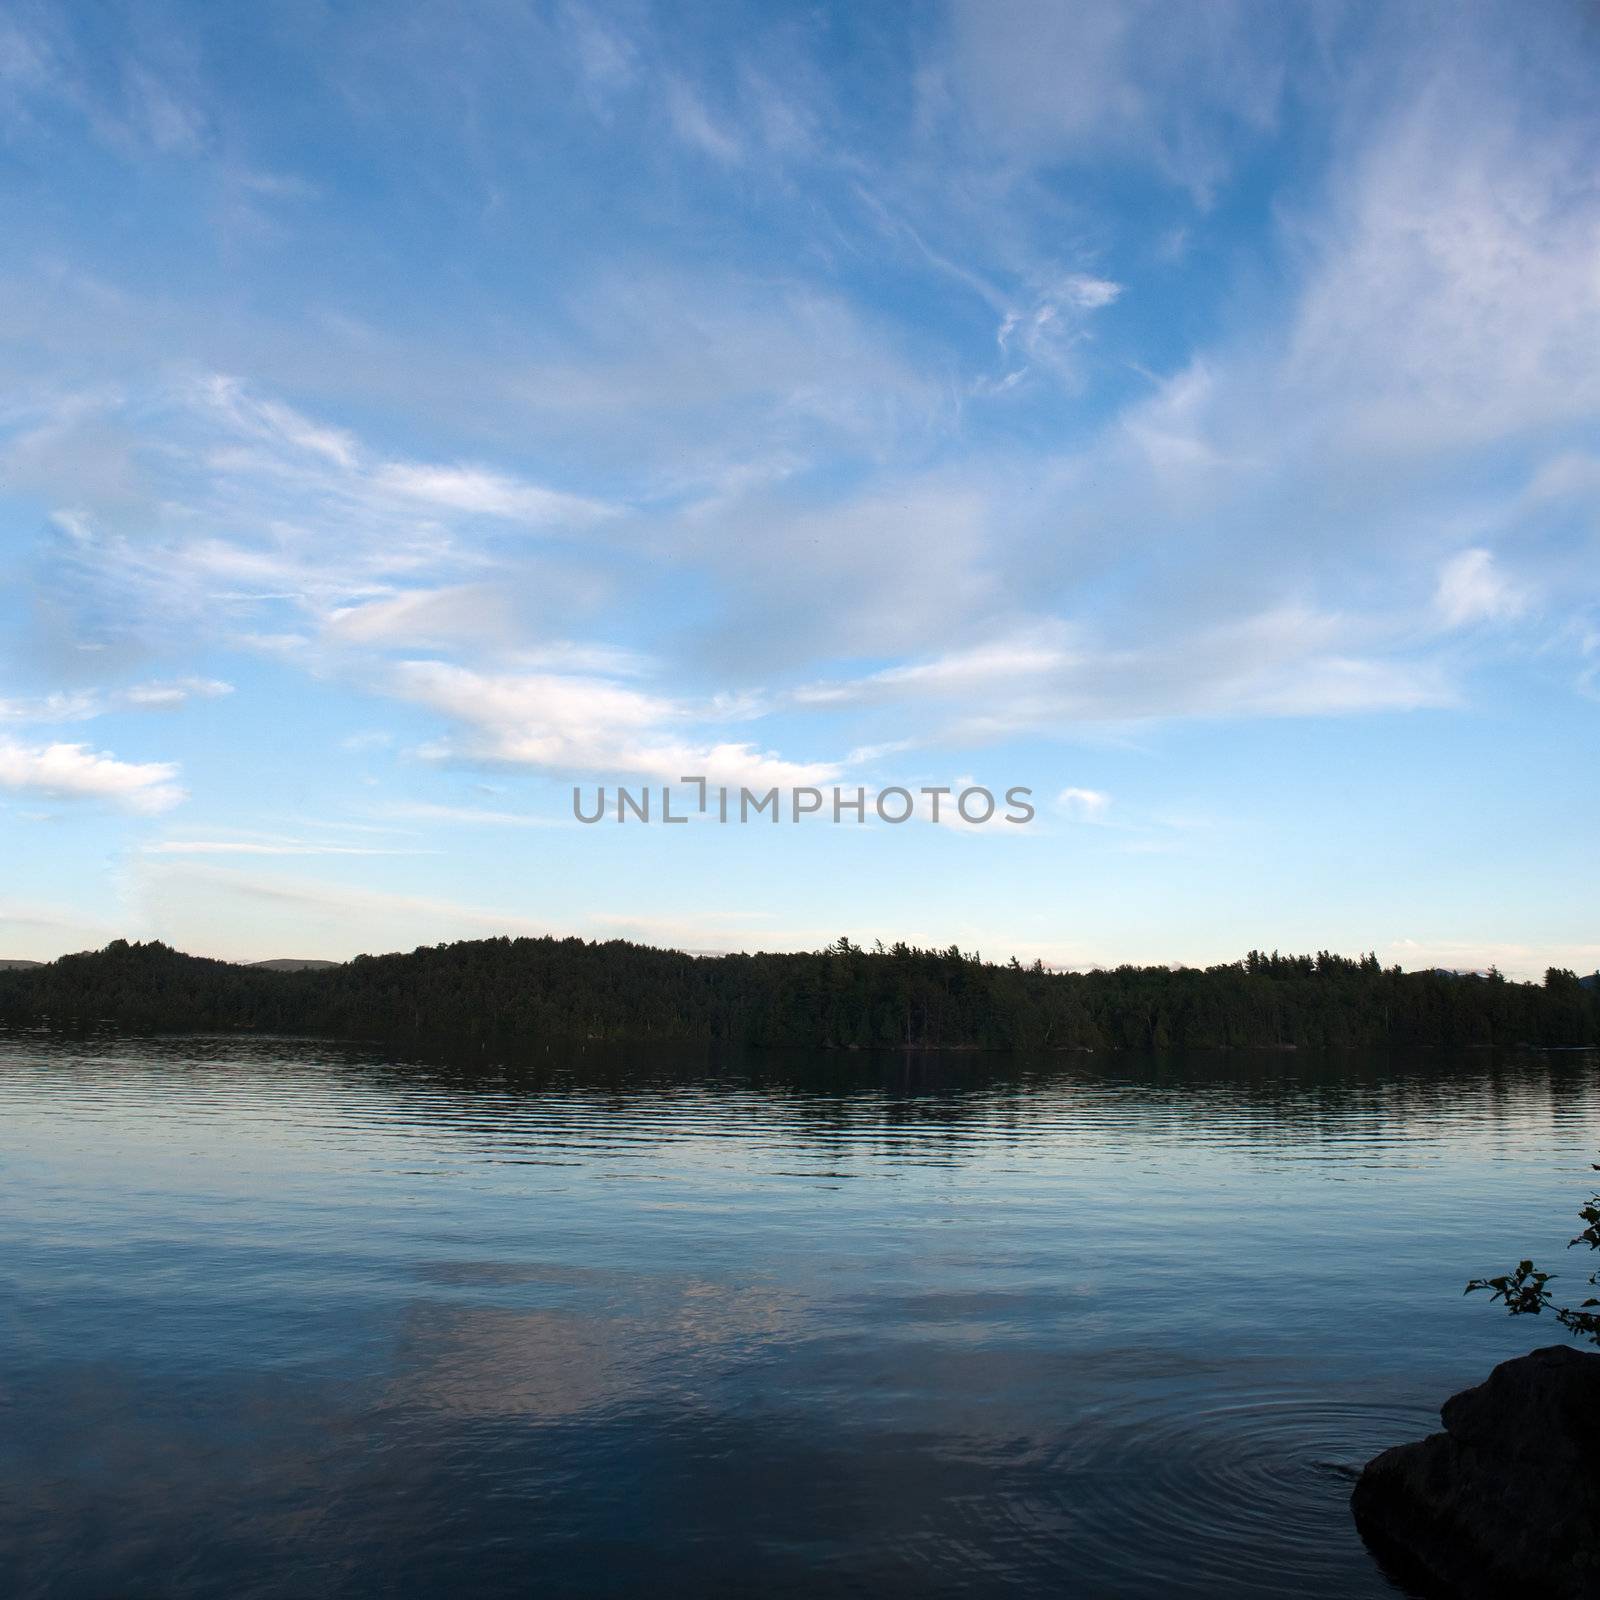 Lower Saranac Lake Panorama by graficallyminded